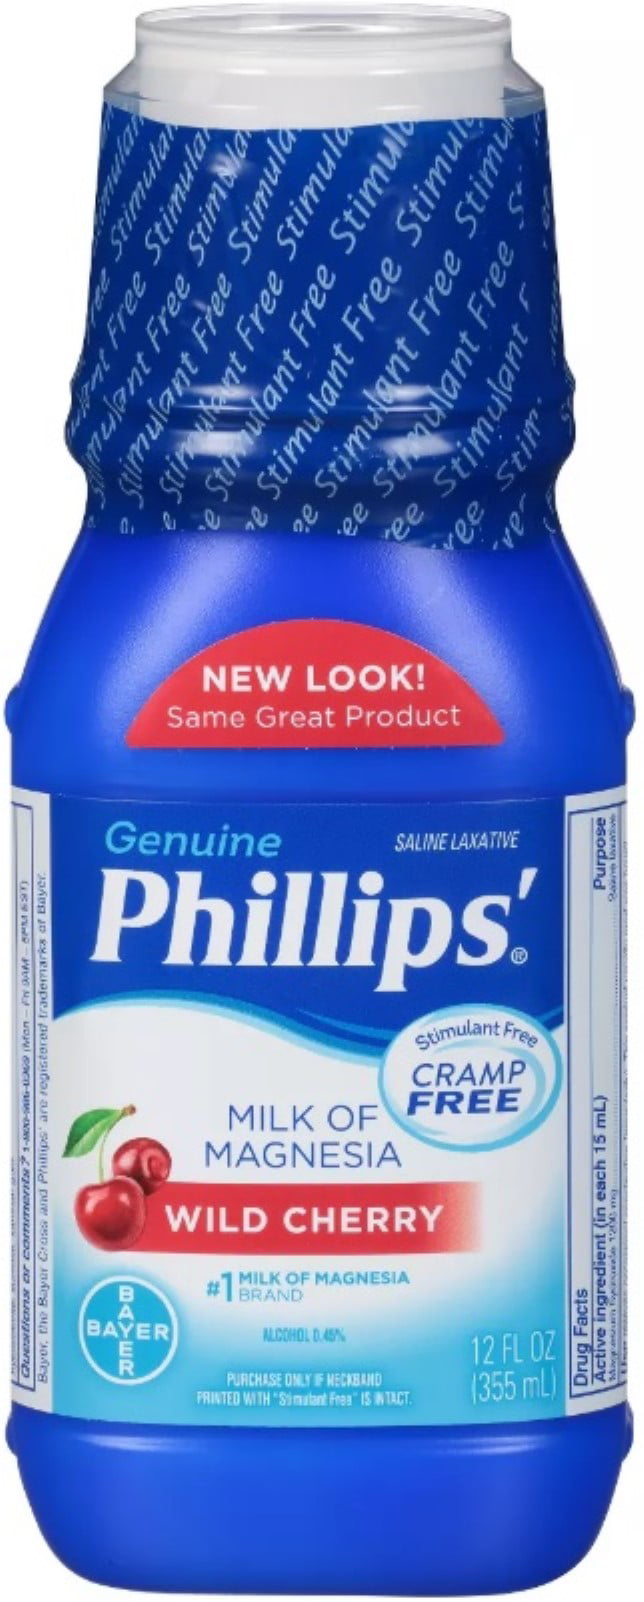 6 Pack - Phillips' Milk of Magnesia Wild Cherry 12 oz ...